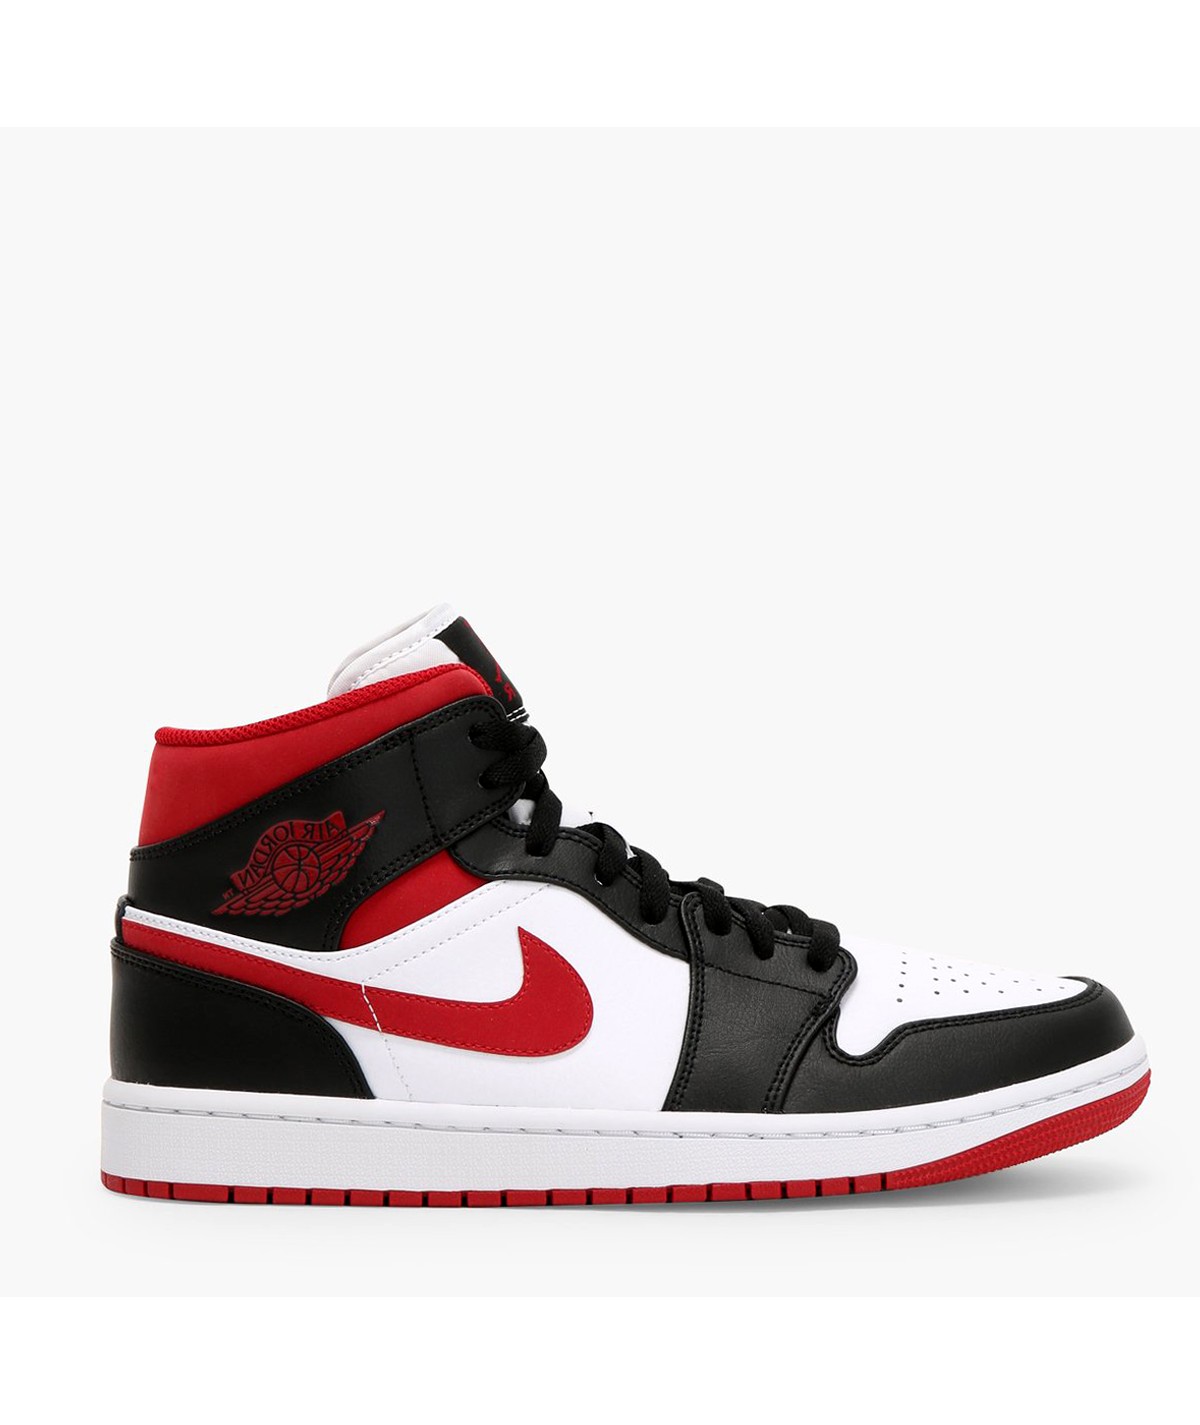 Кроссовки air jordan 1 mid. Nike Air Jordan 1 Red. Nike Air Jordan 1 Mid se. Nike Air Jordan 1 Mid. Nike Air Jordan 1 Black Red.